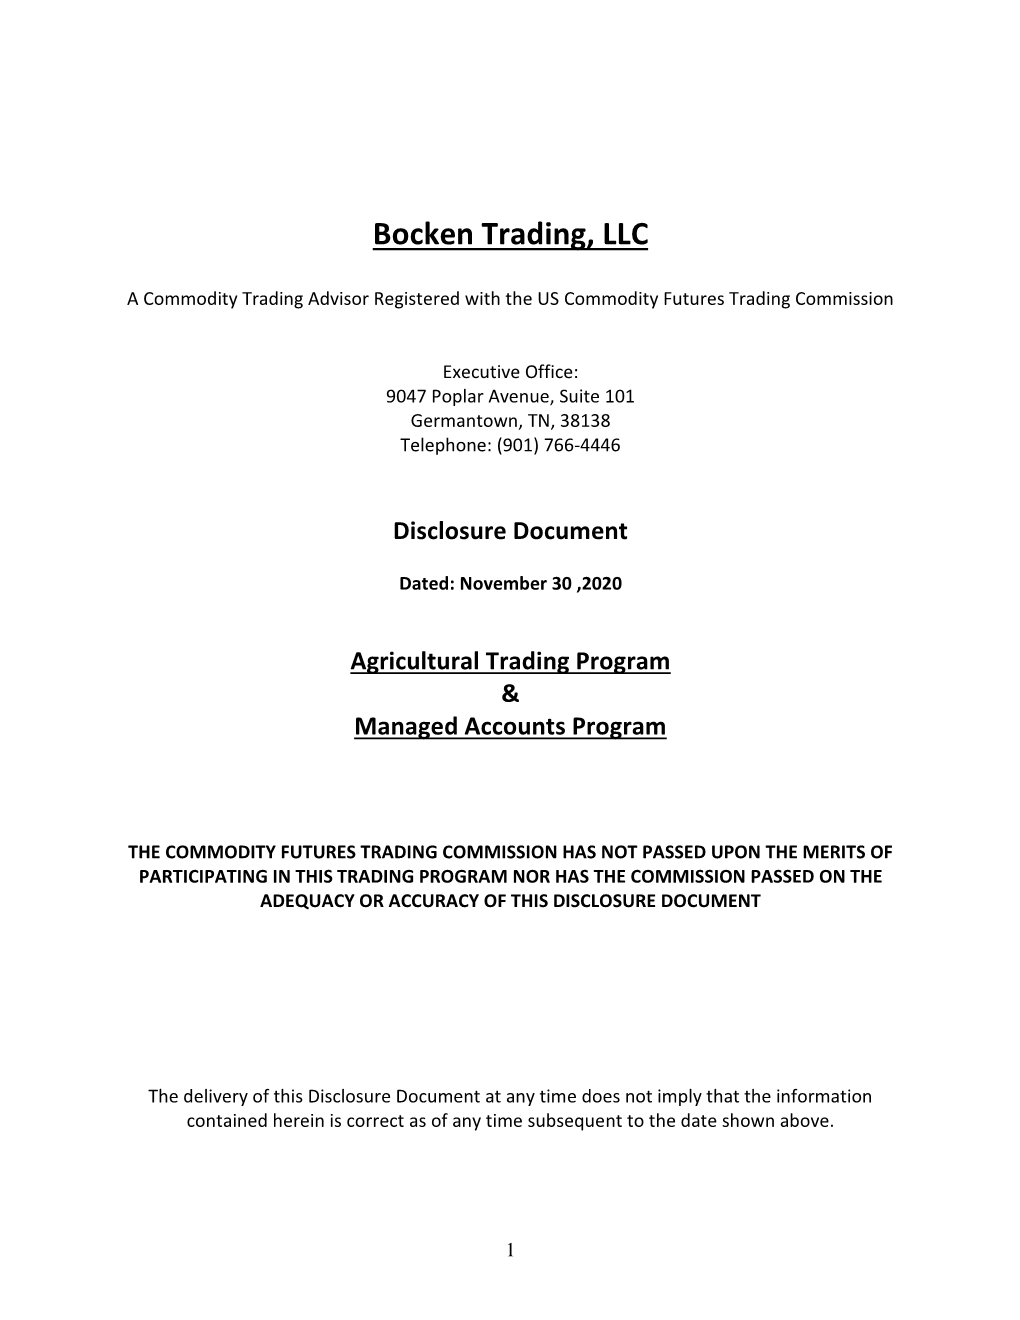 Bocken Trading, LLC Disclosure Document